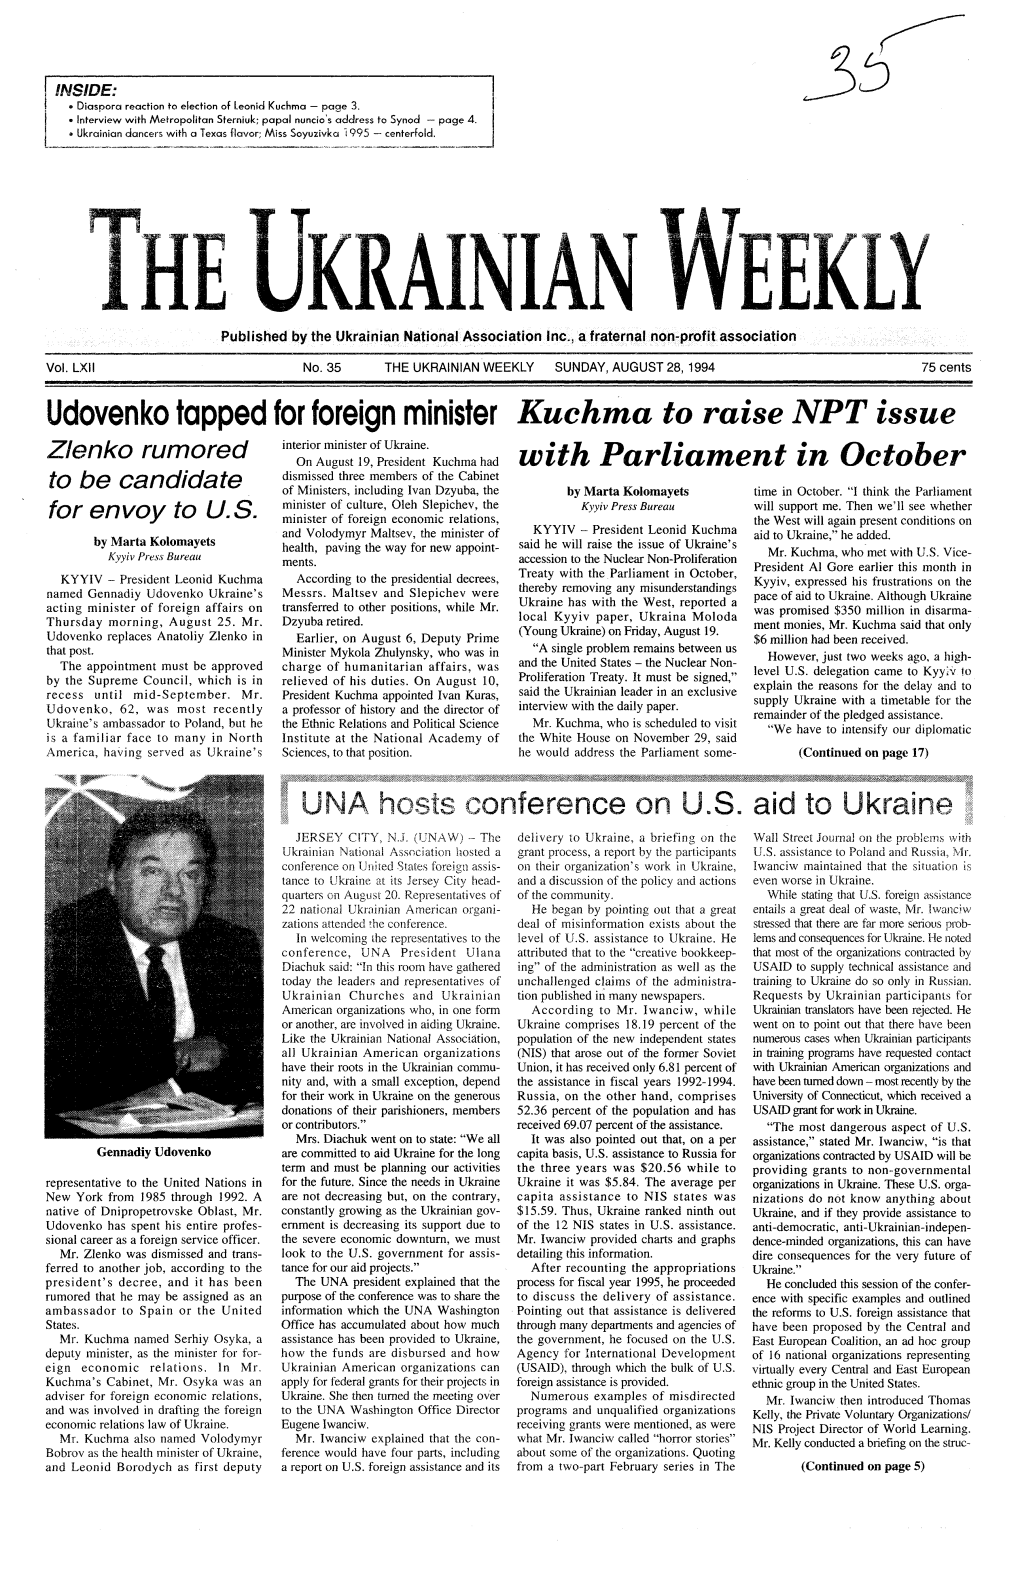 The Ukrainian Weekly 1994, No.35